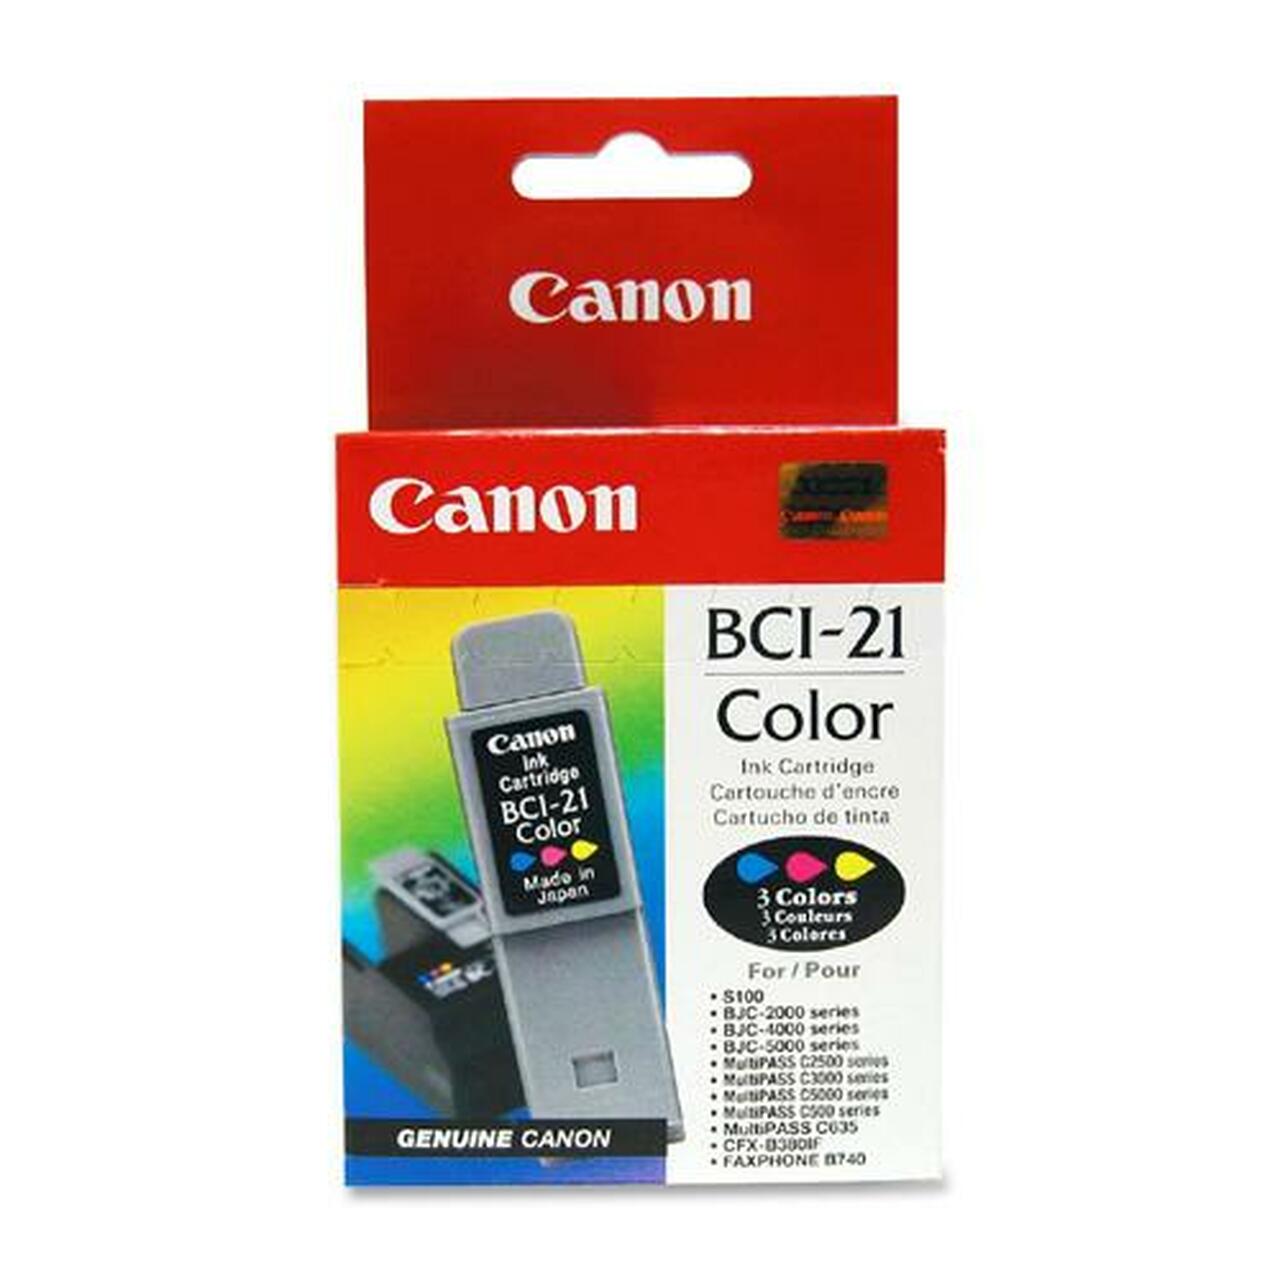 Absolute Toner Canon BCI-21 Original Genuine OEM Color Ink Cartridge | 0955A003 Original Canon Cartridges